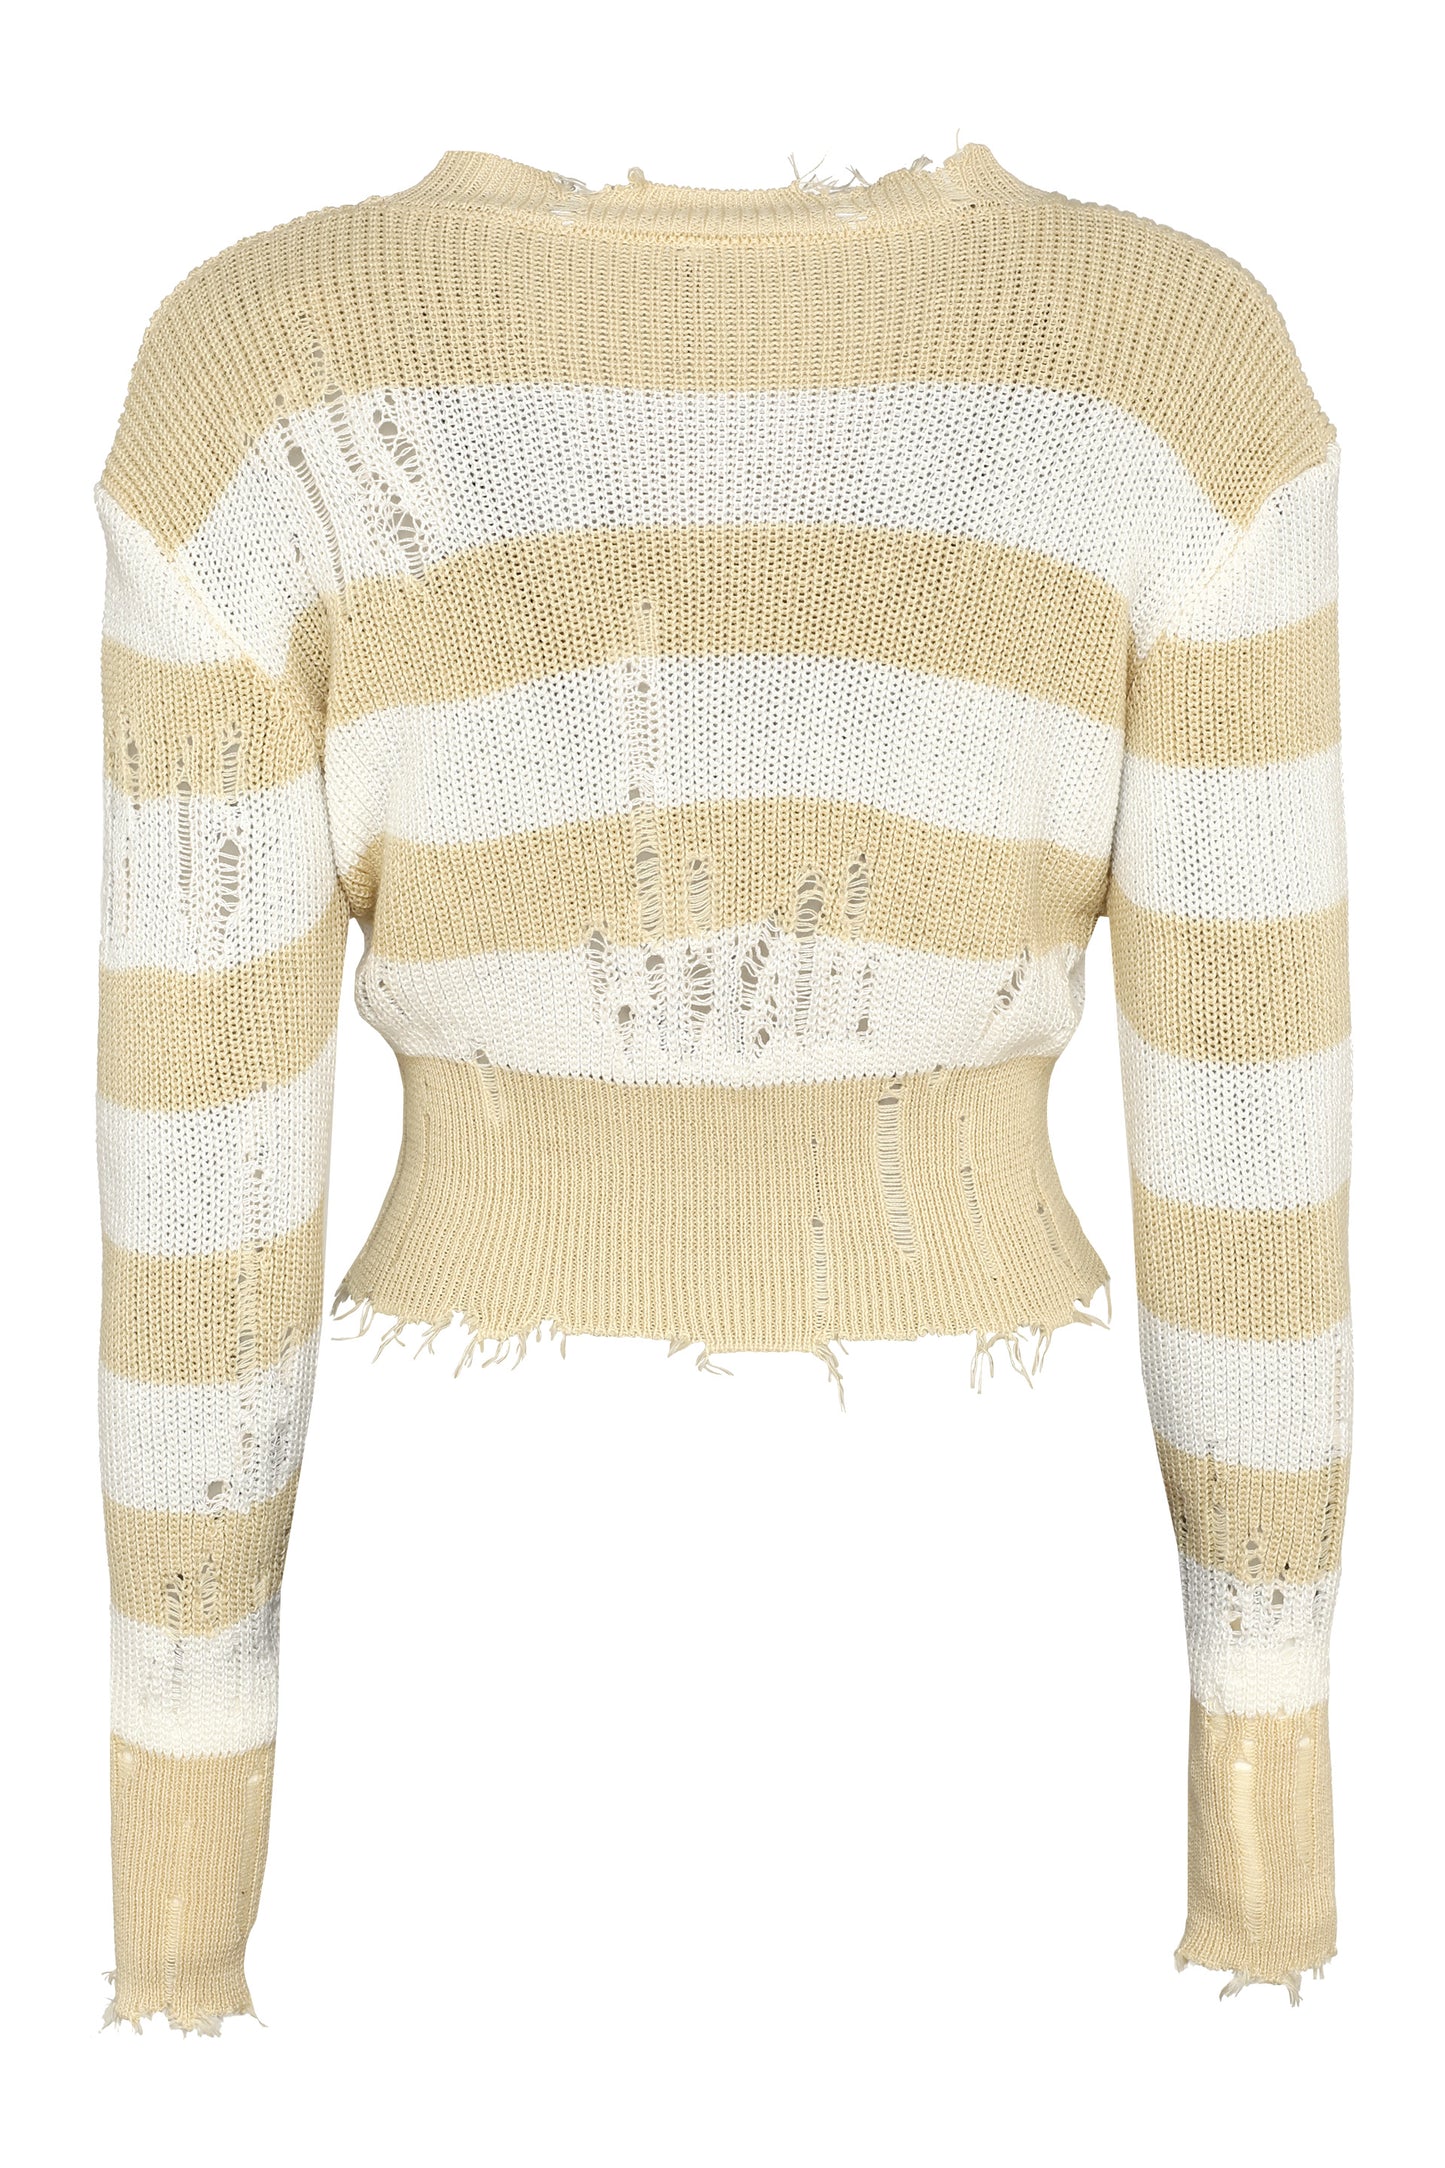 Striped distressed sweater